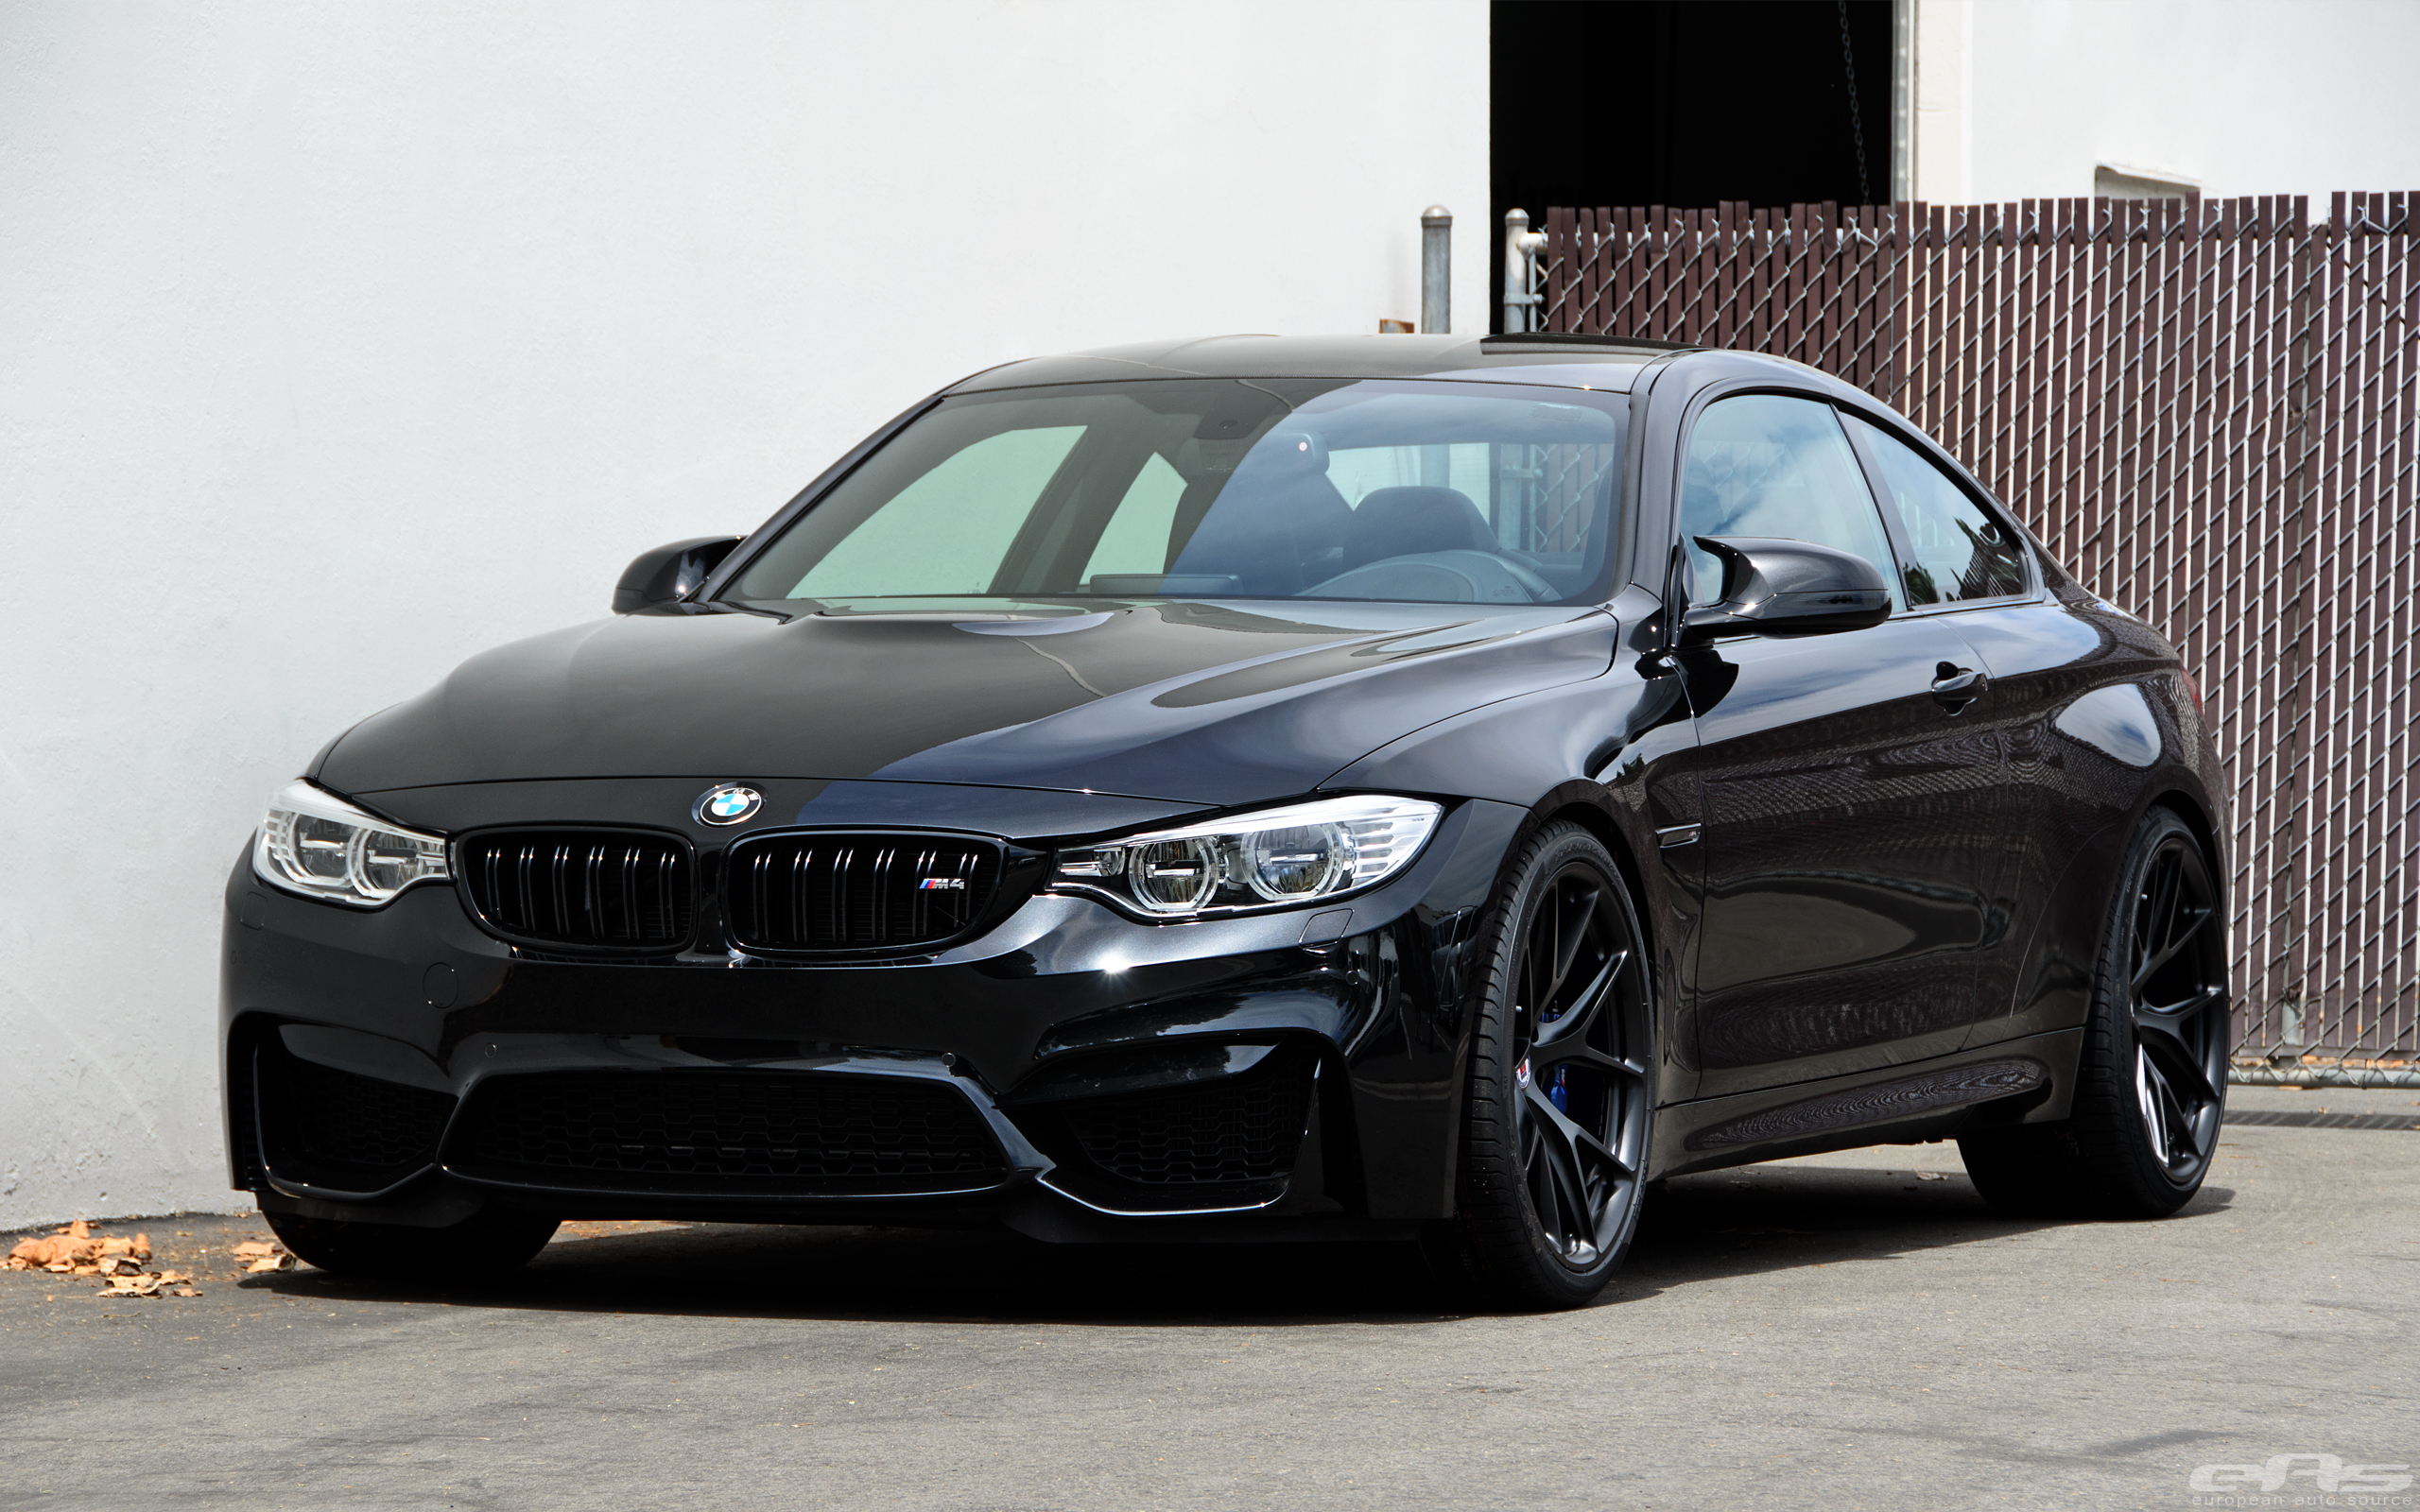 BMW M4 Backgrounds, Compatible - PC, Mobile, Gadgets| 2560x1600 px